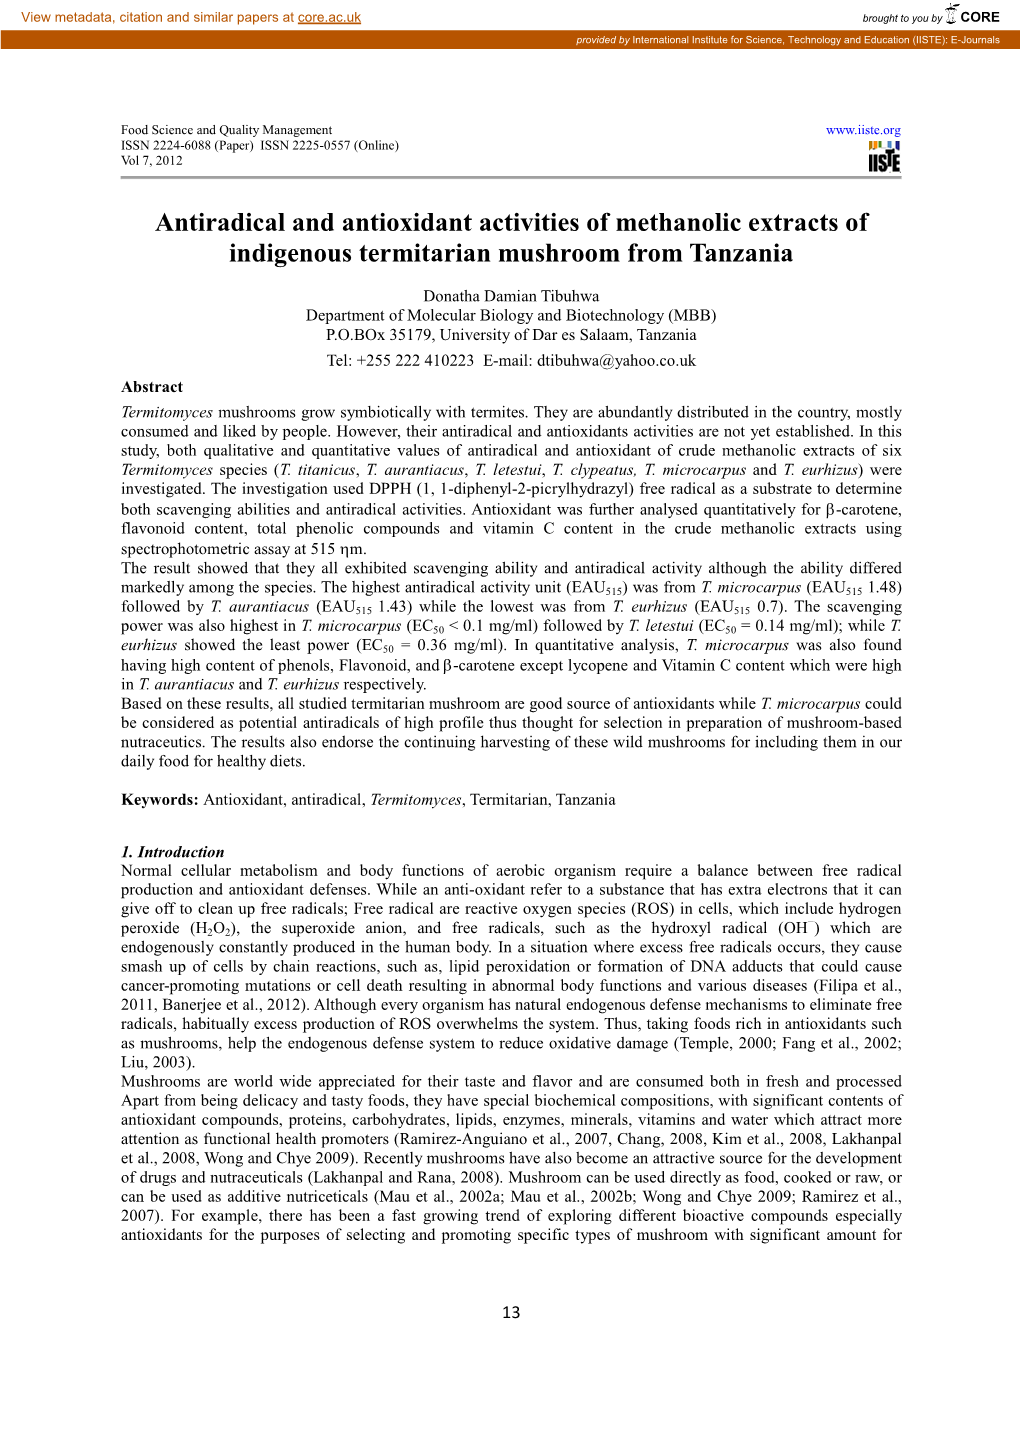 Antiradical and Antioxidant Activities of Methanolic Extracts of Indigenous Termitarian Mushroom from Tanzania